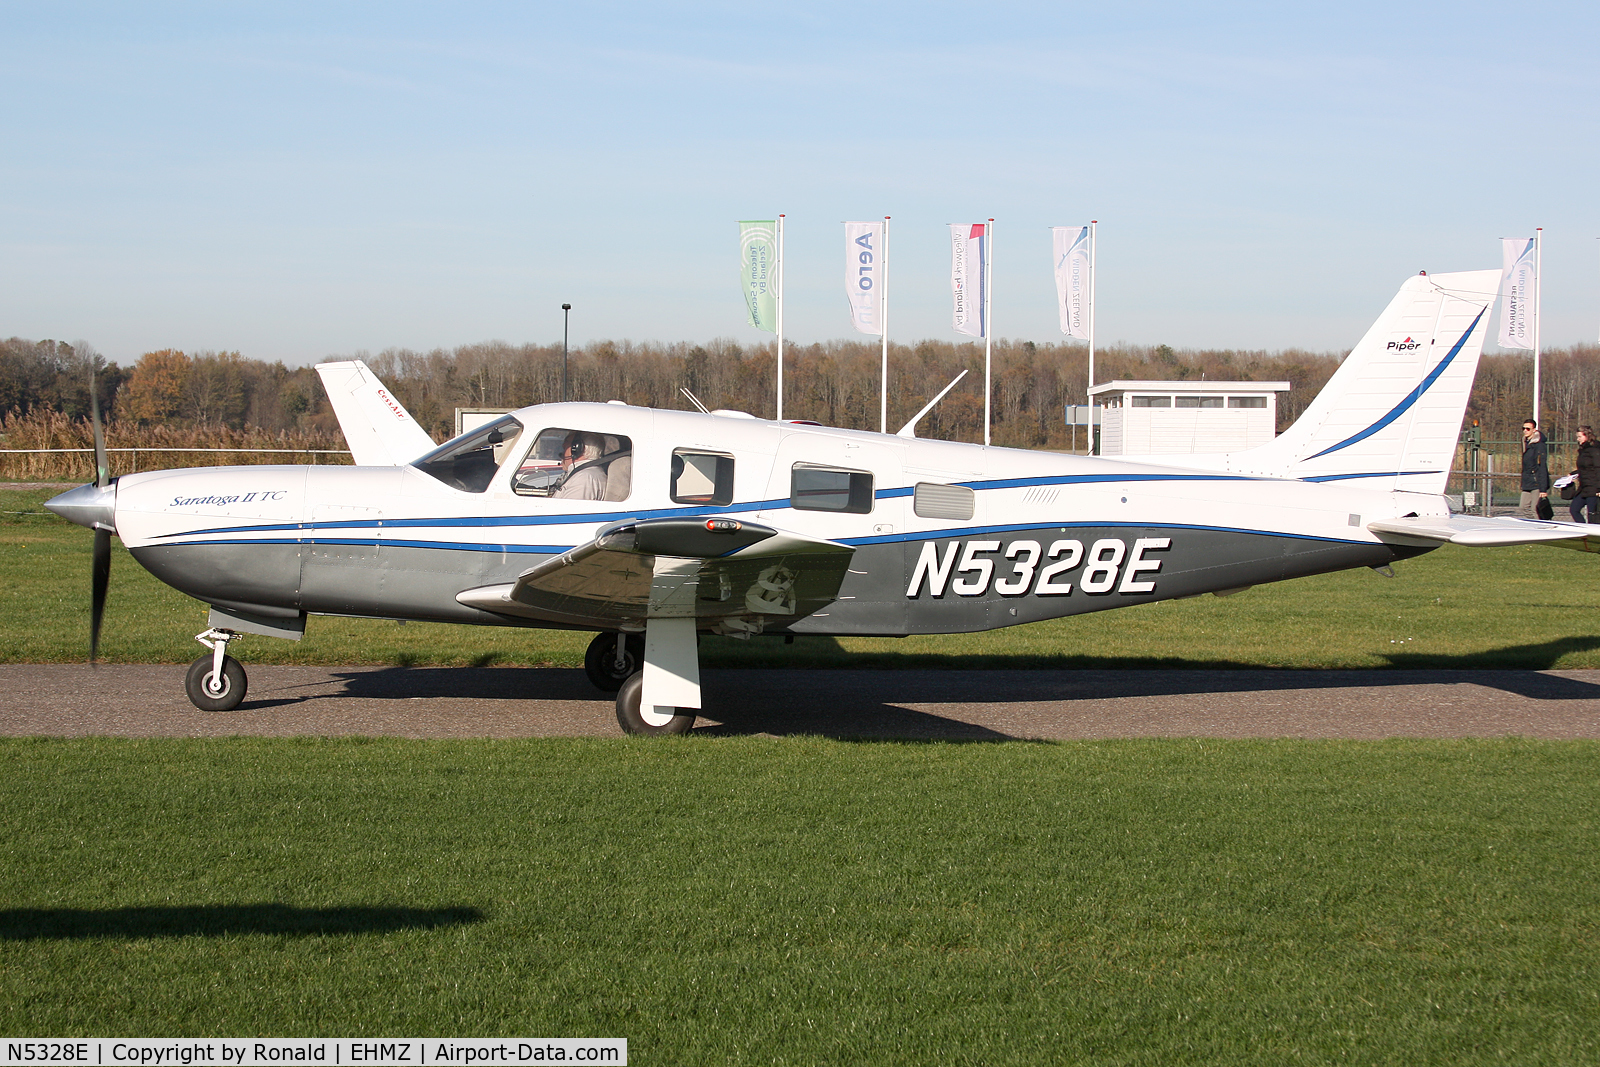 N5328E, 2001 Piper PA-32R-301T Turbo Saratoga C/N 3257256, at ehmz